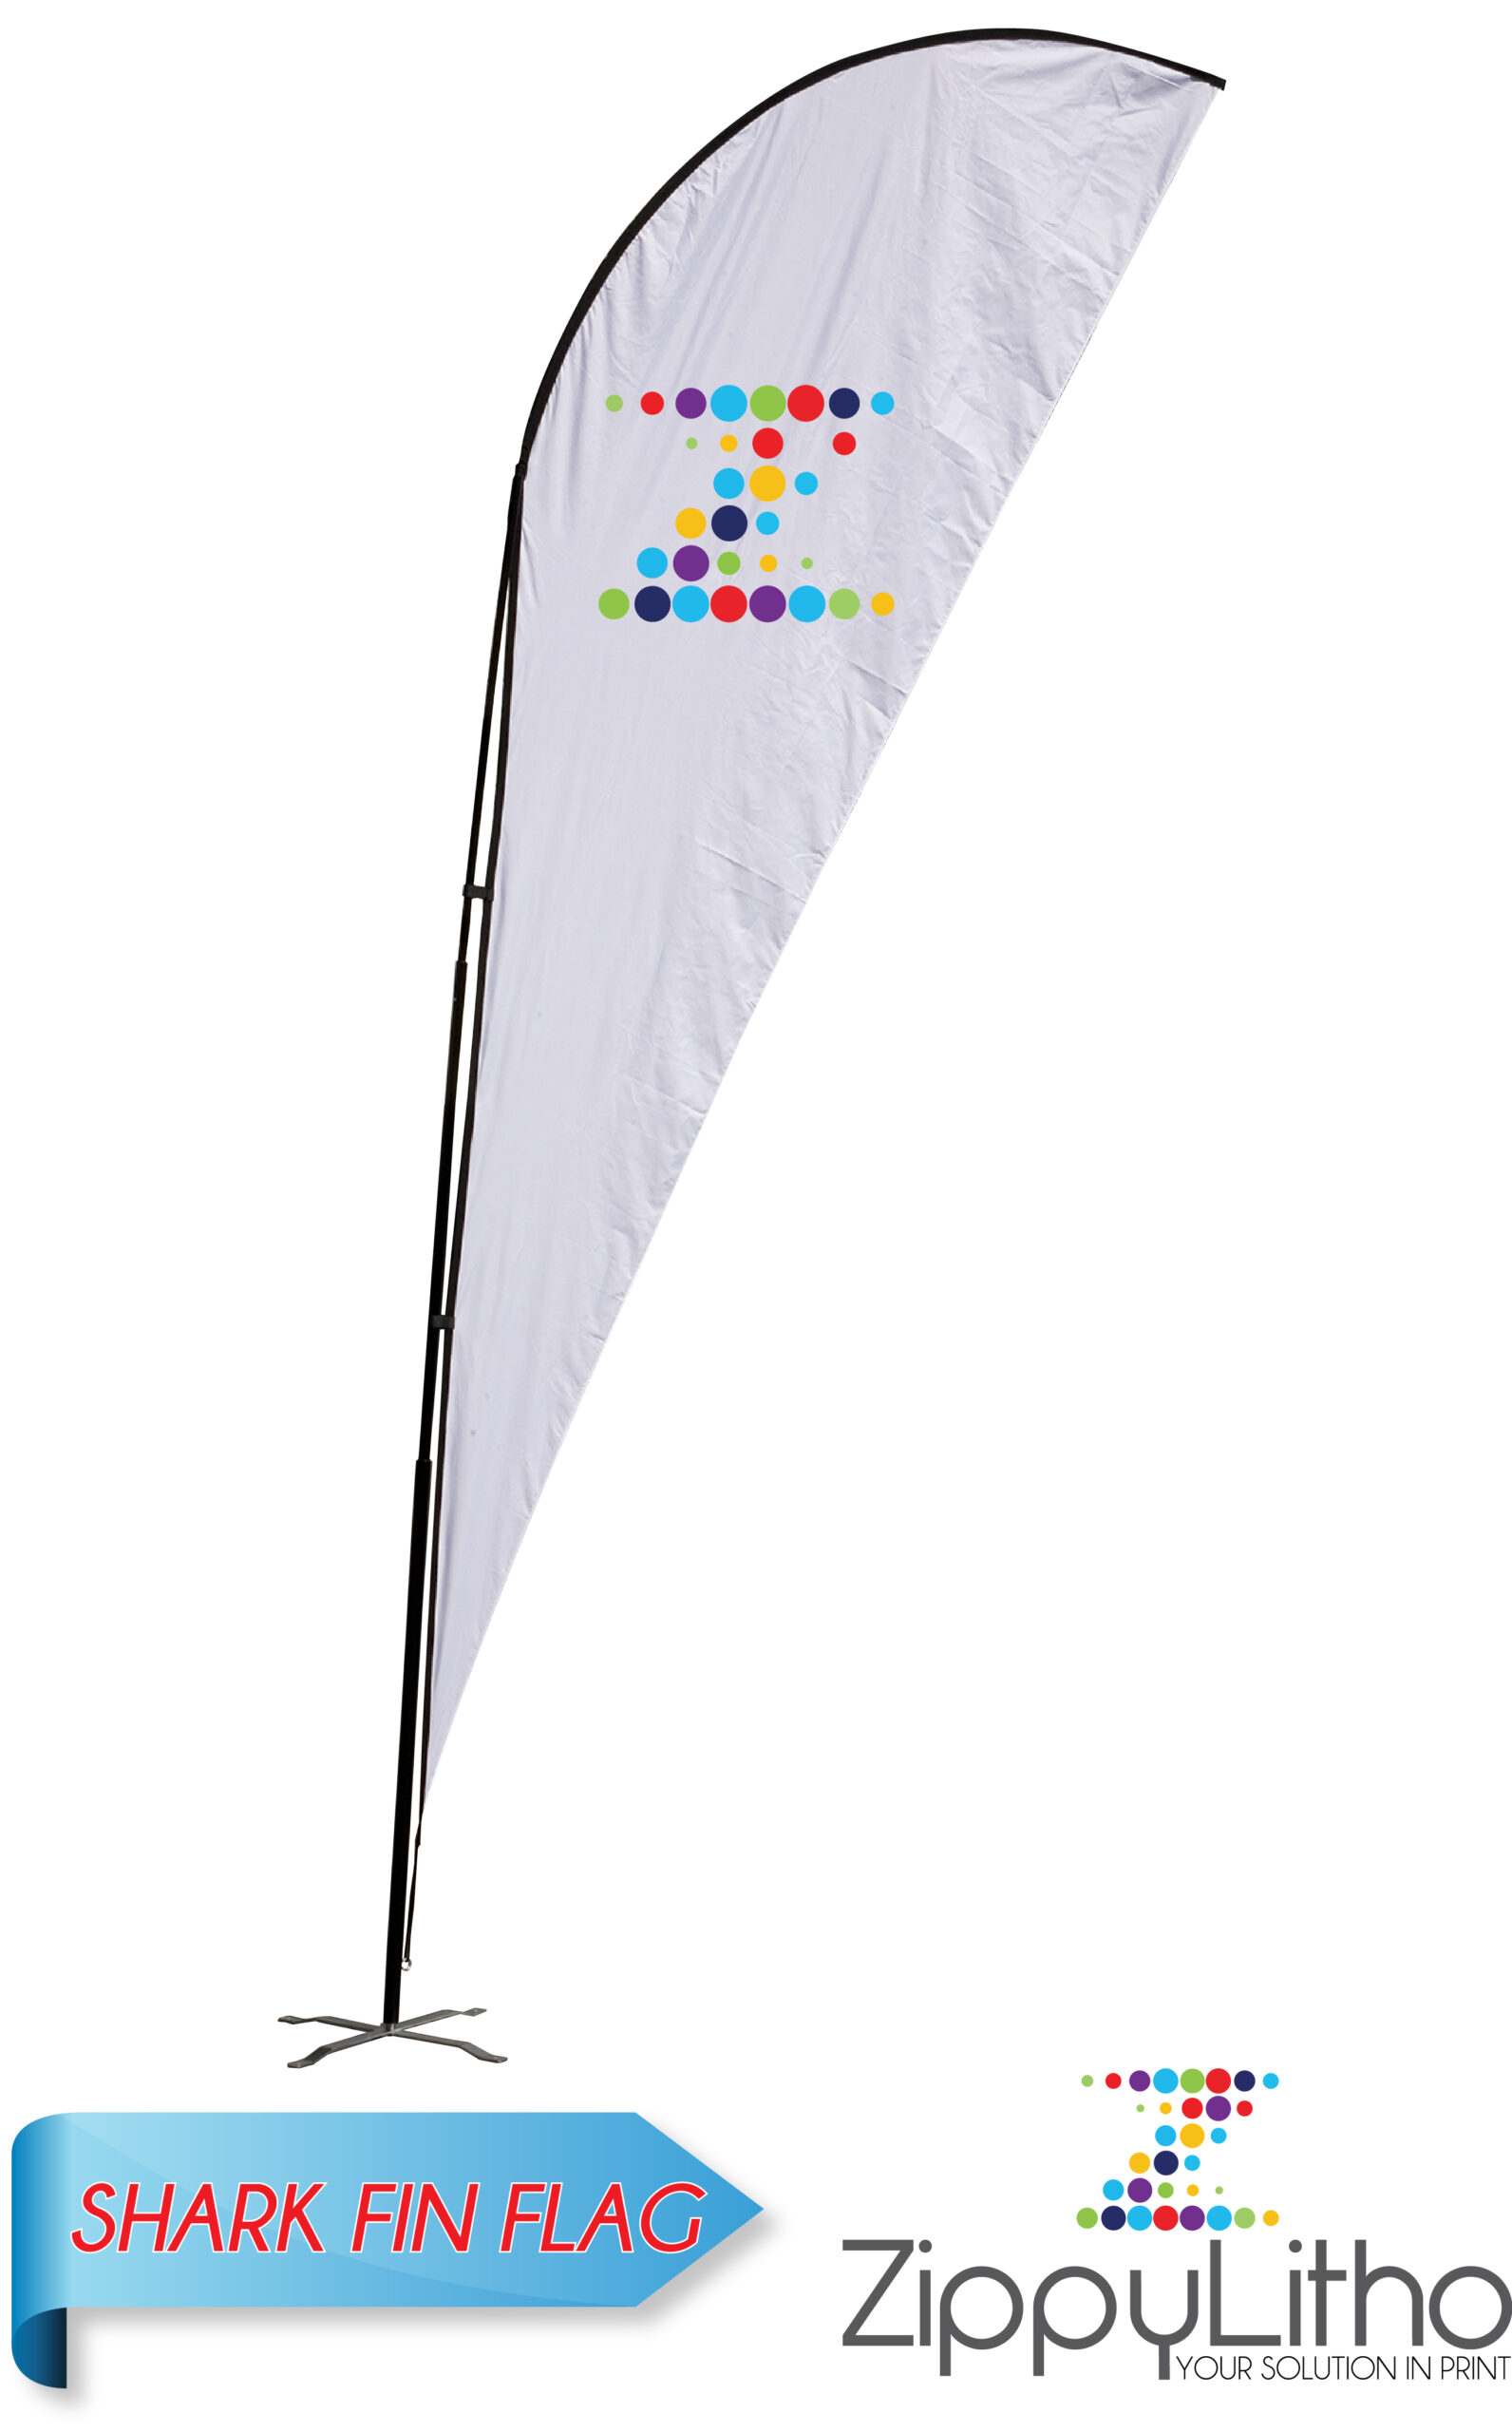 Shark Fin Flag | Zippy Litho With Regard To Sharkfin Banner Template